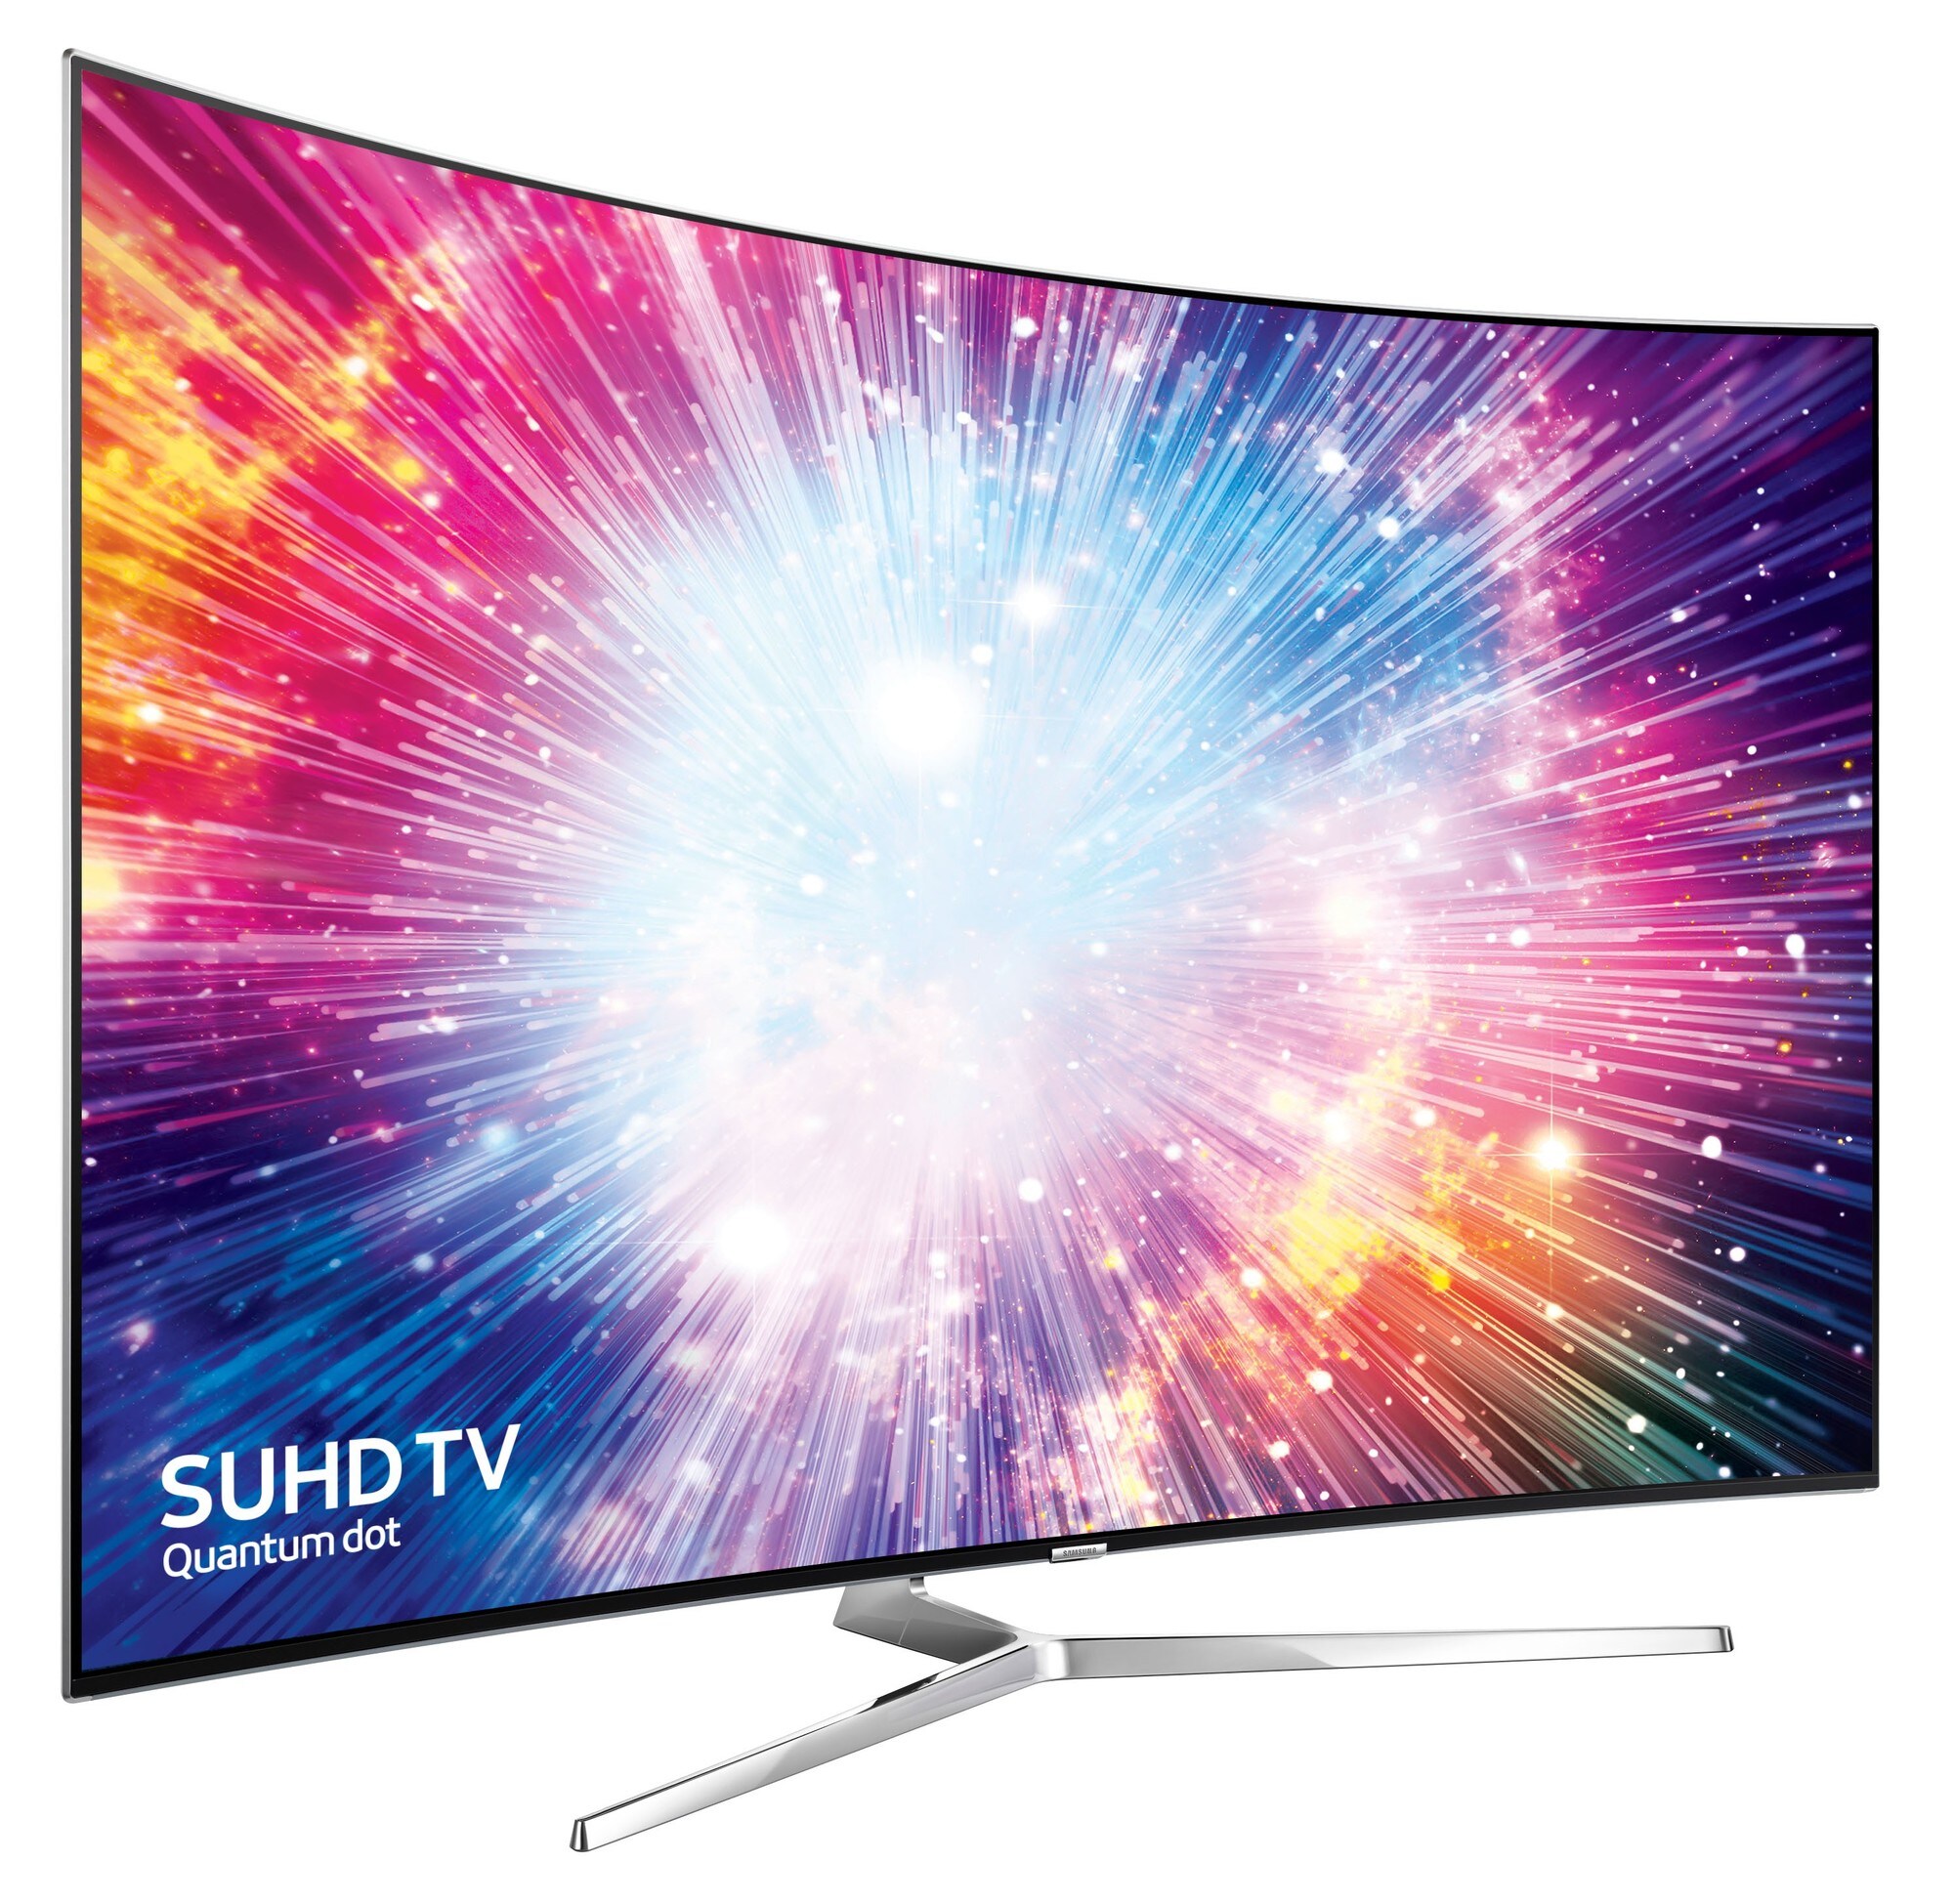 39+ Samsung curved 55 4k uhd smart tv ue55ks9005 ideas in 2021 